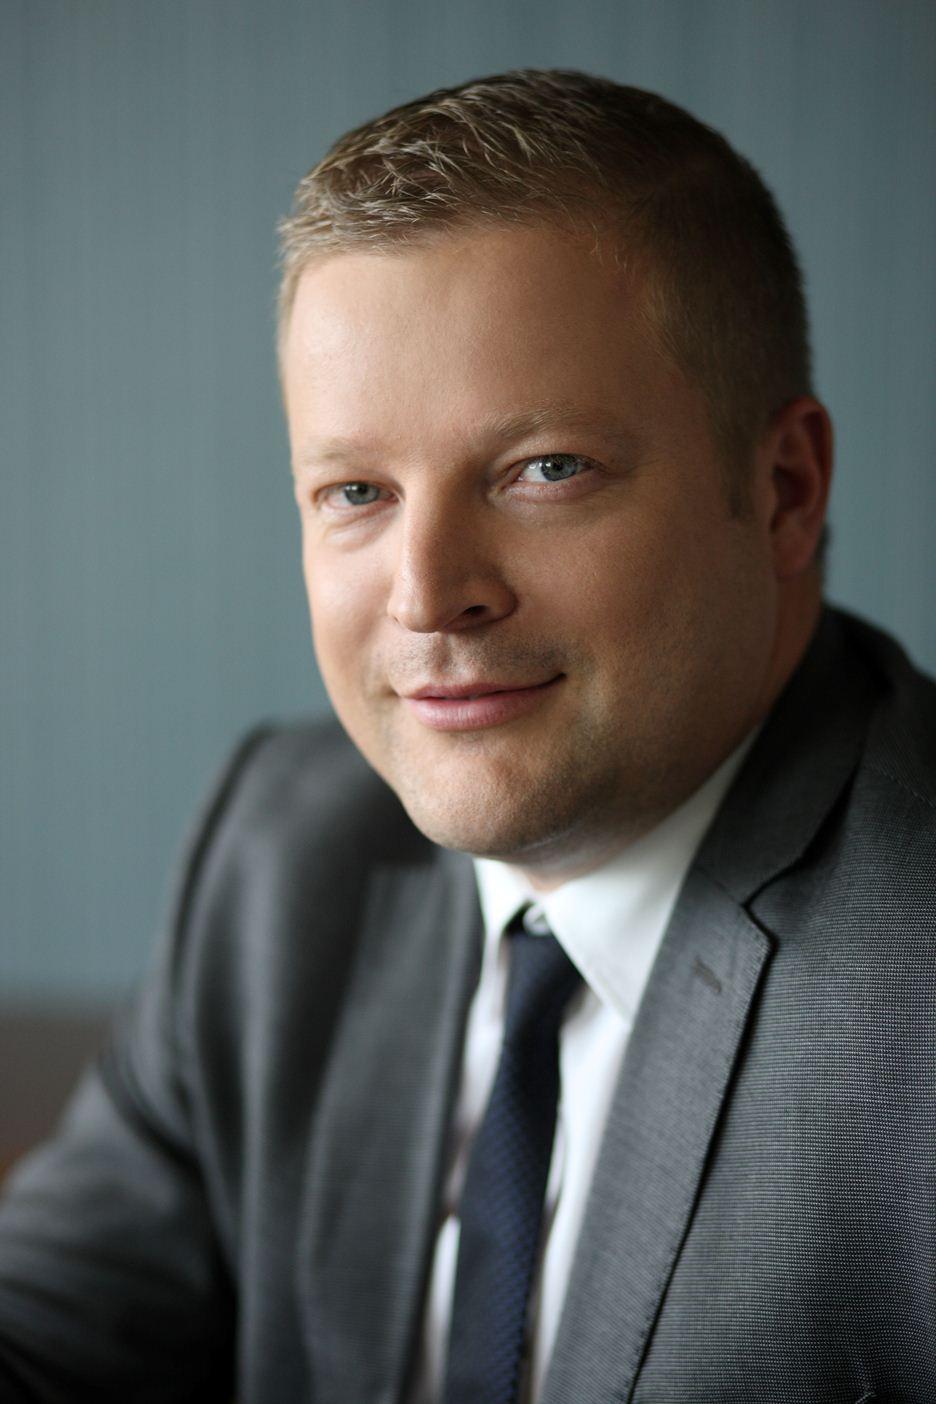 Zsolt Pálinkás, Chief Operating Officer, Tesco Central Europe